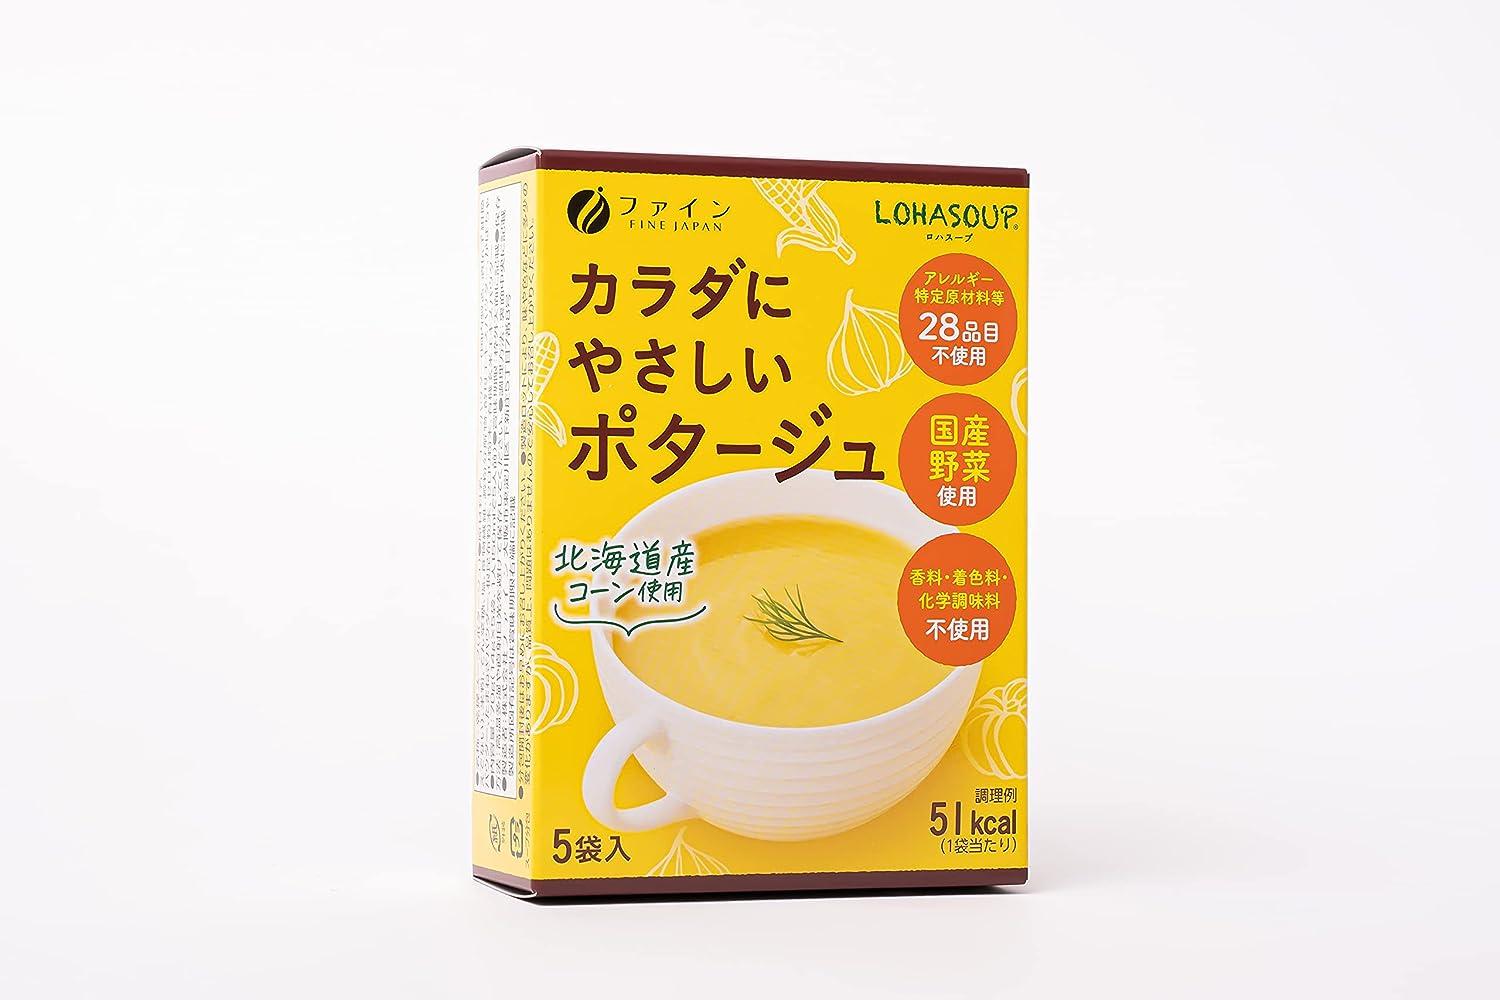  FINE Japan Japanese Corn Soup 93 gr (5 Packets / 5